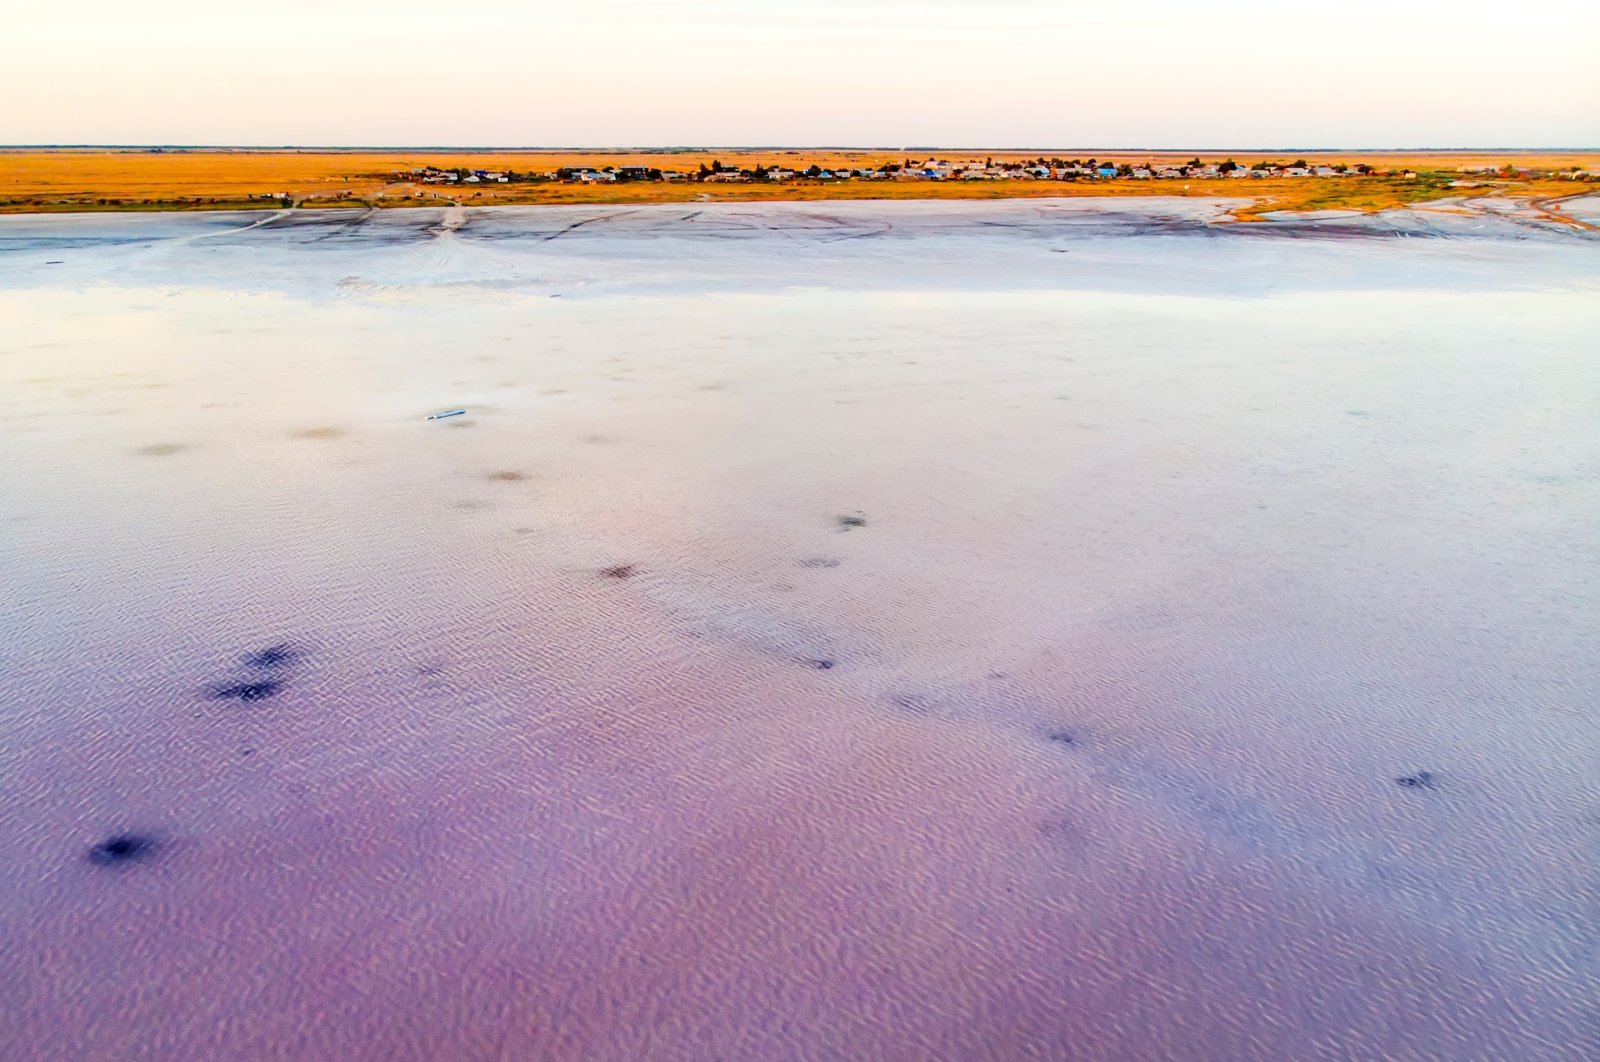 Pemandangan alam paling berwarna: Danau merah muda yang selalu mempesona